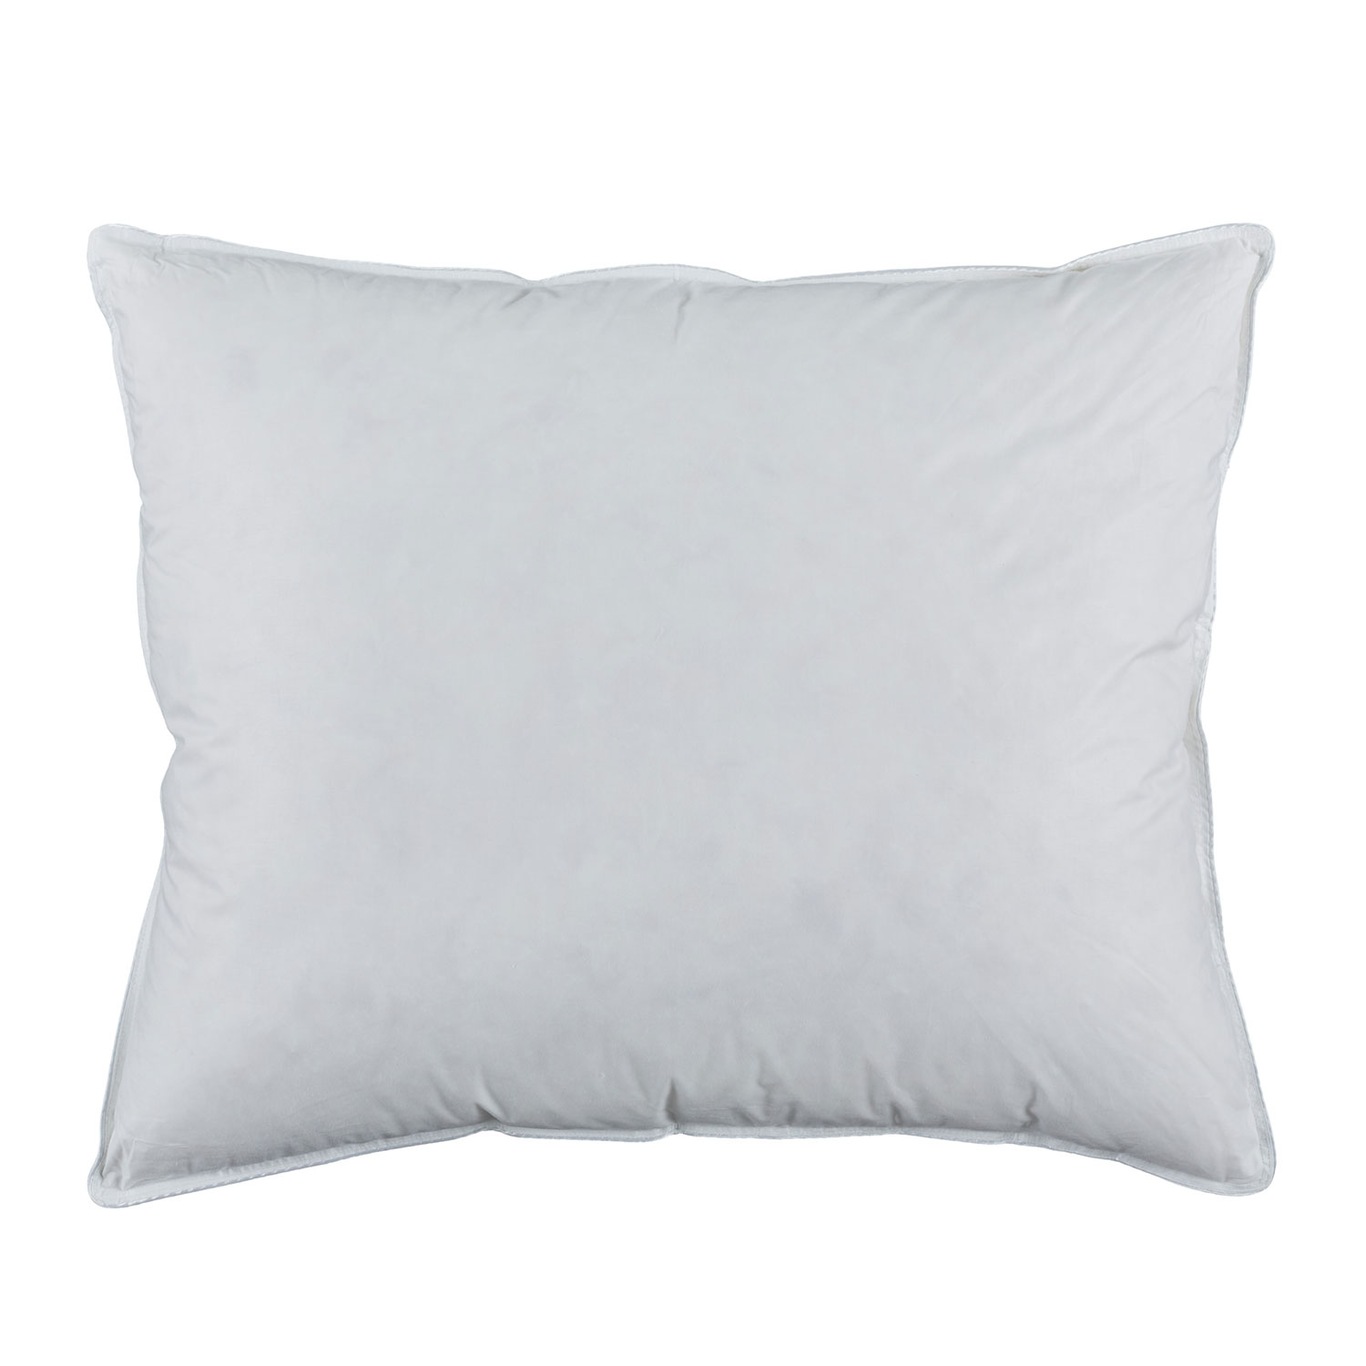 Sonno Down Pillow Medium White 50x60 cm, 450g